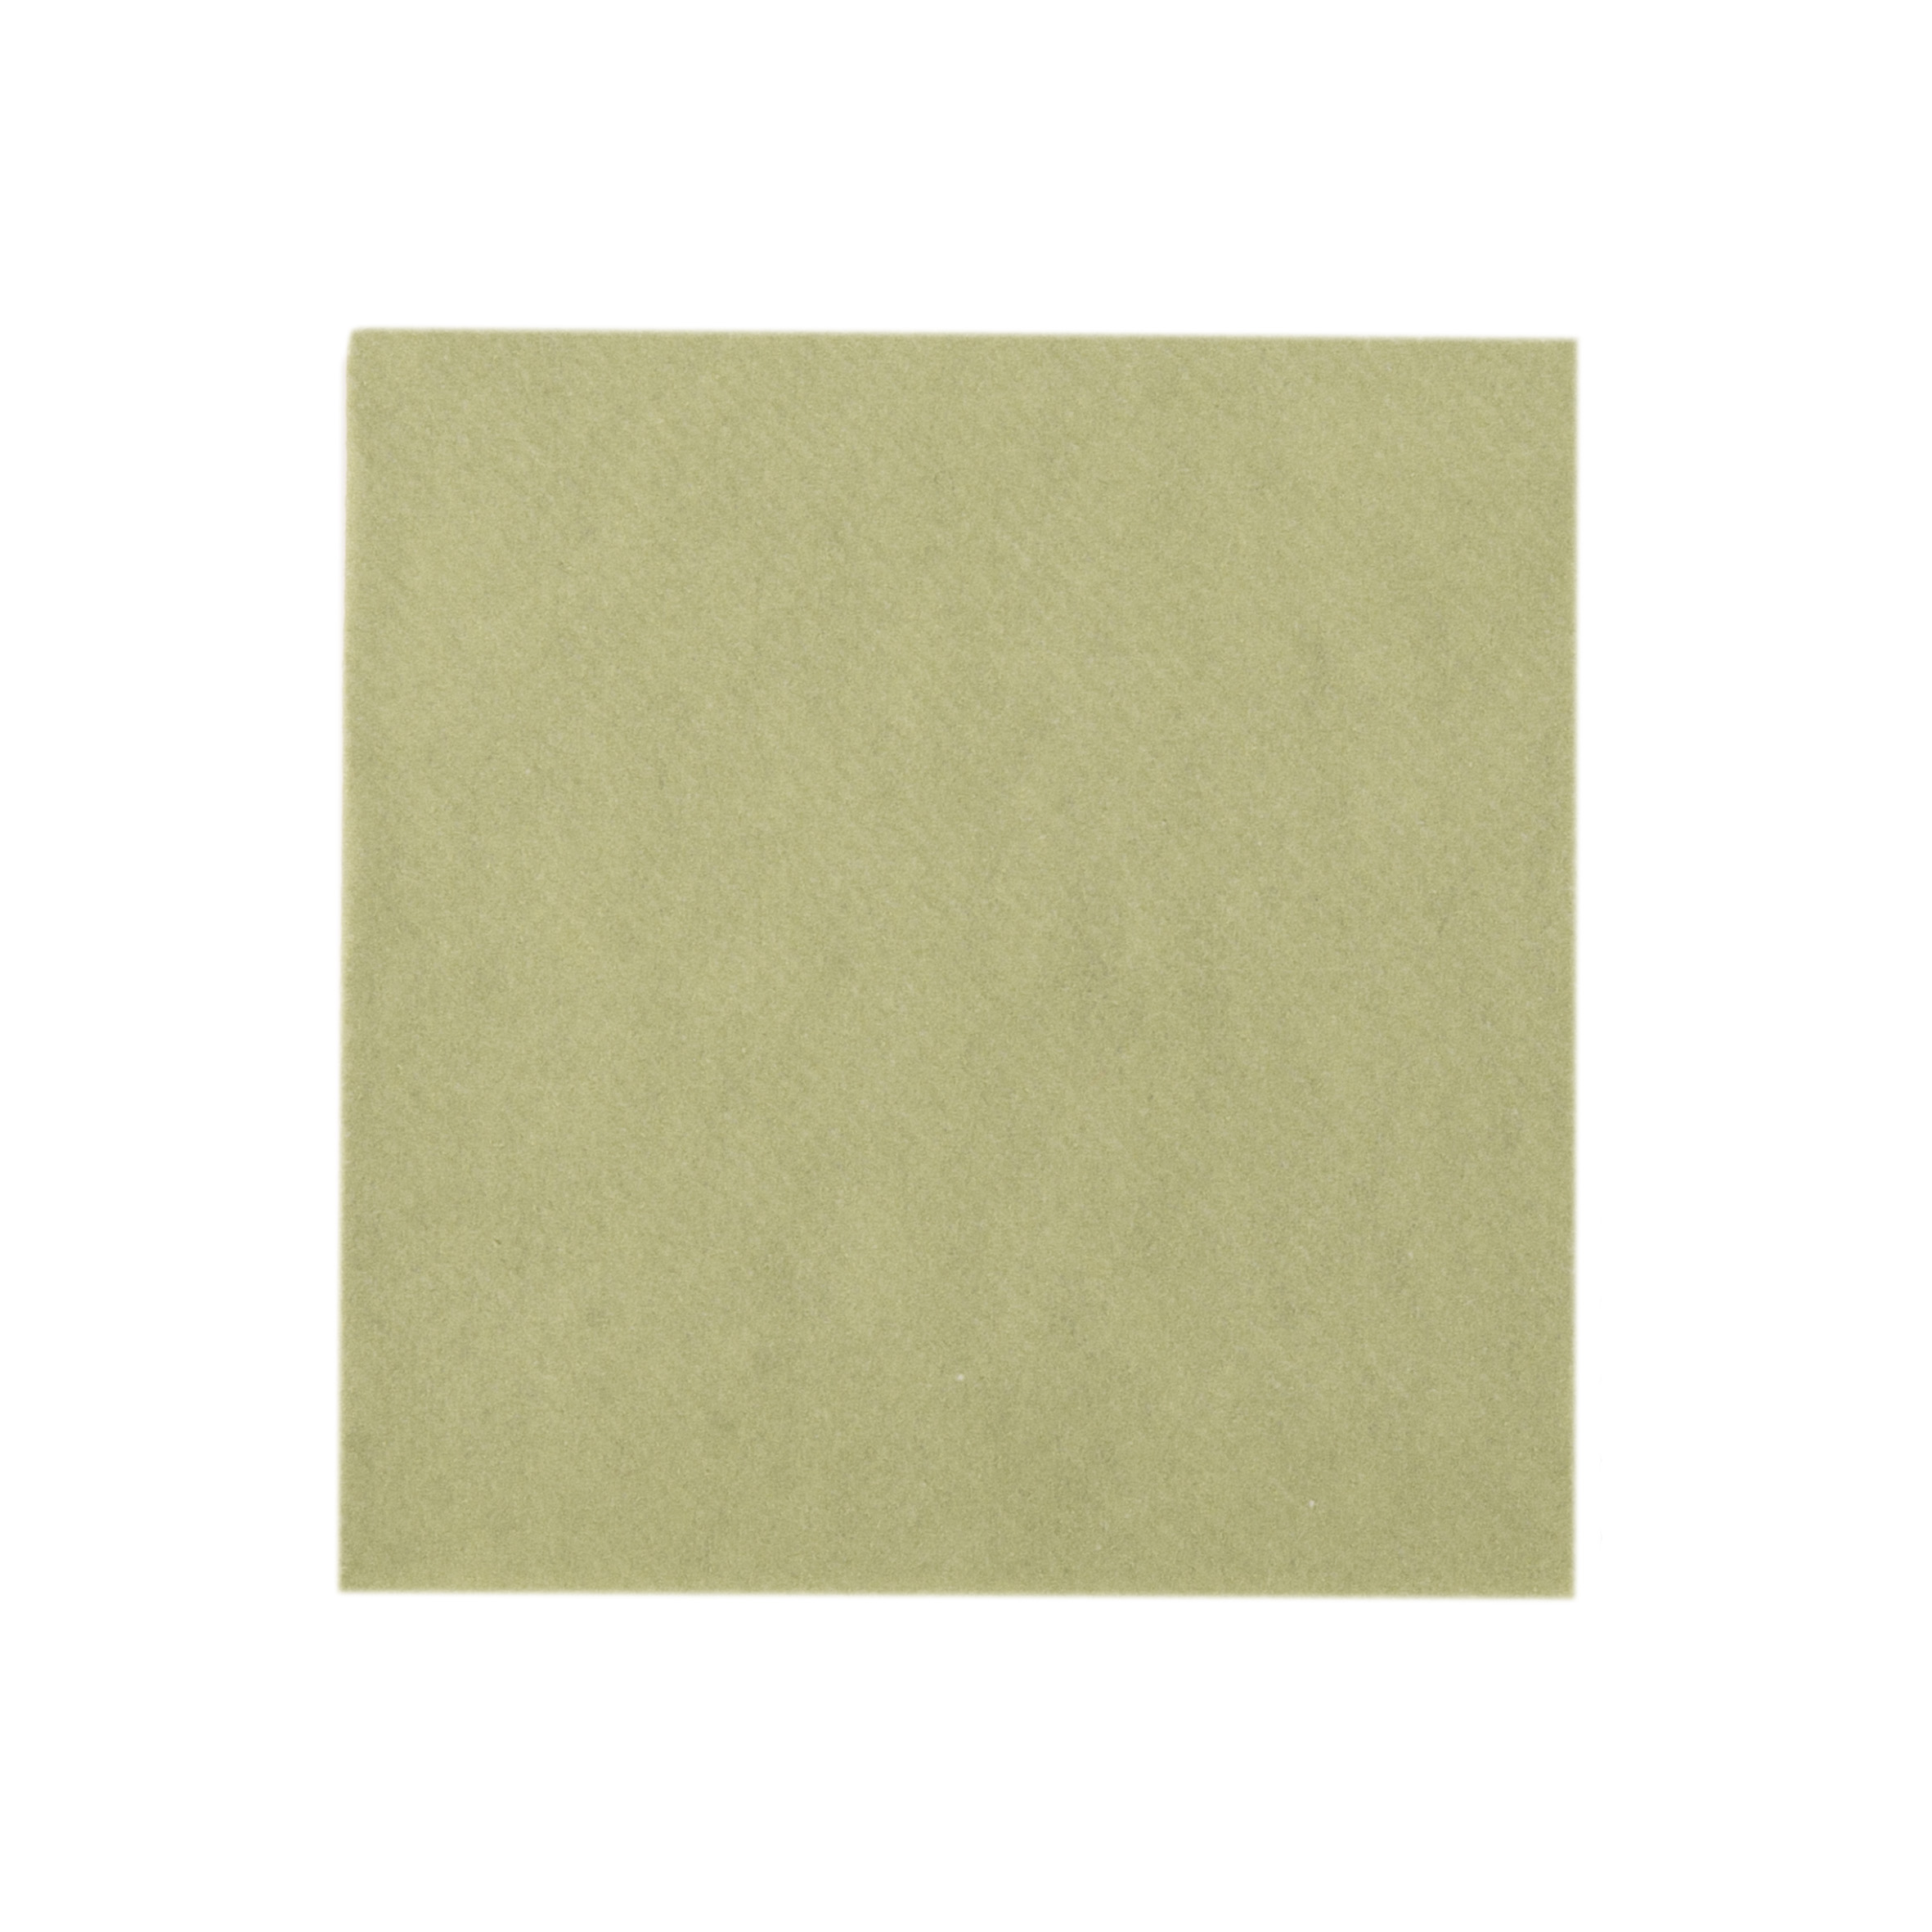 Mank Serviette Linclass-Light 1/4 Falz, 17 x 17 cm, Basic oliv